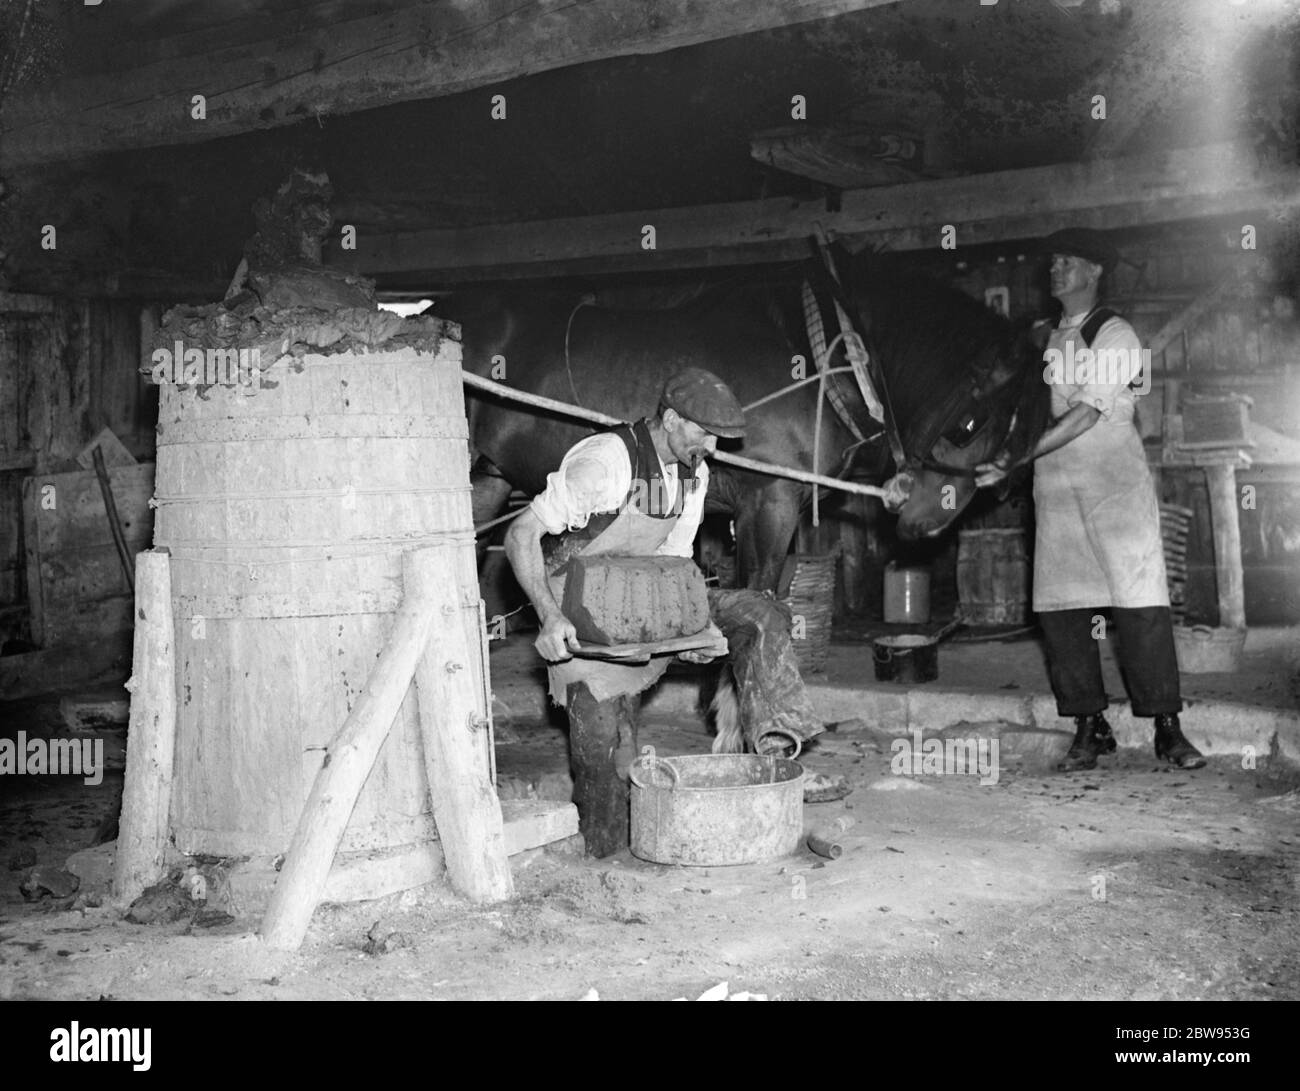 Making clay bricks using a horse powered press. 1936. Stock Photo